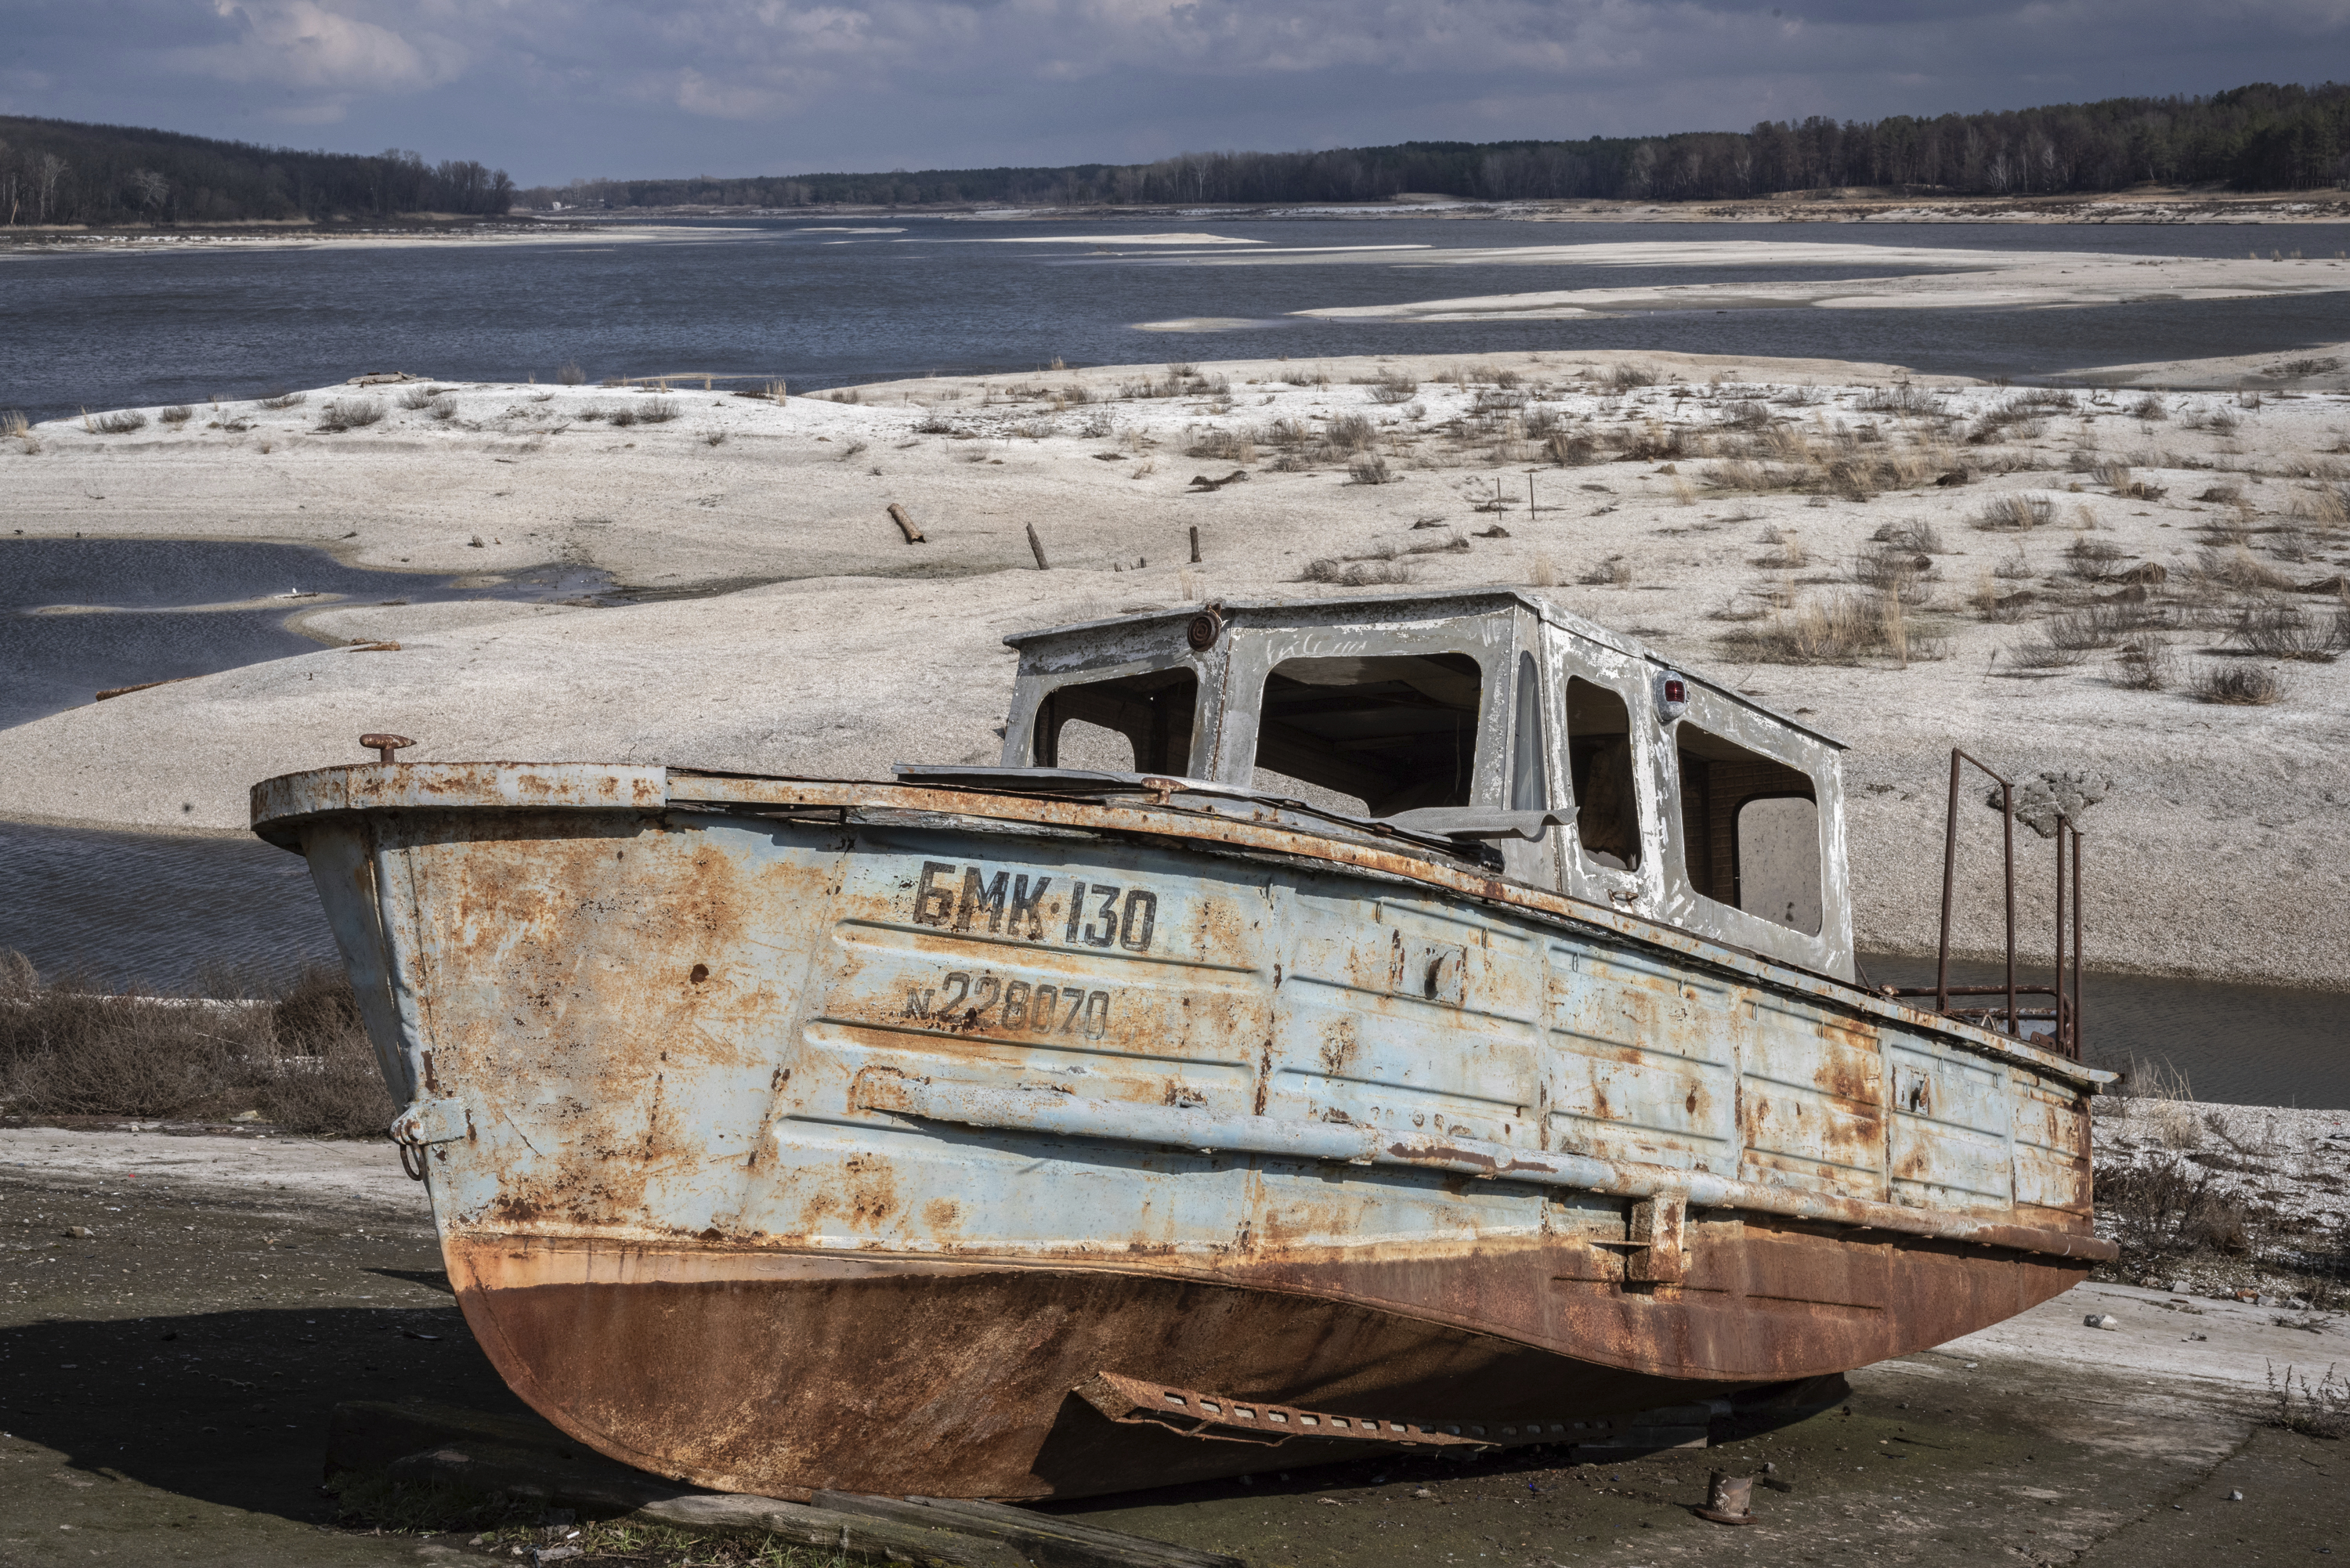 Una barca varada frente a la casi desaparecida presa de Oskil.